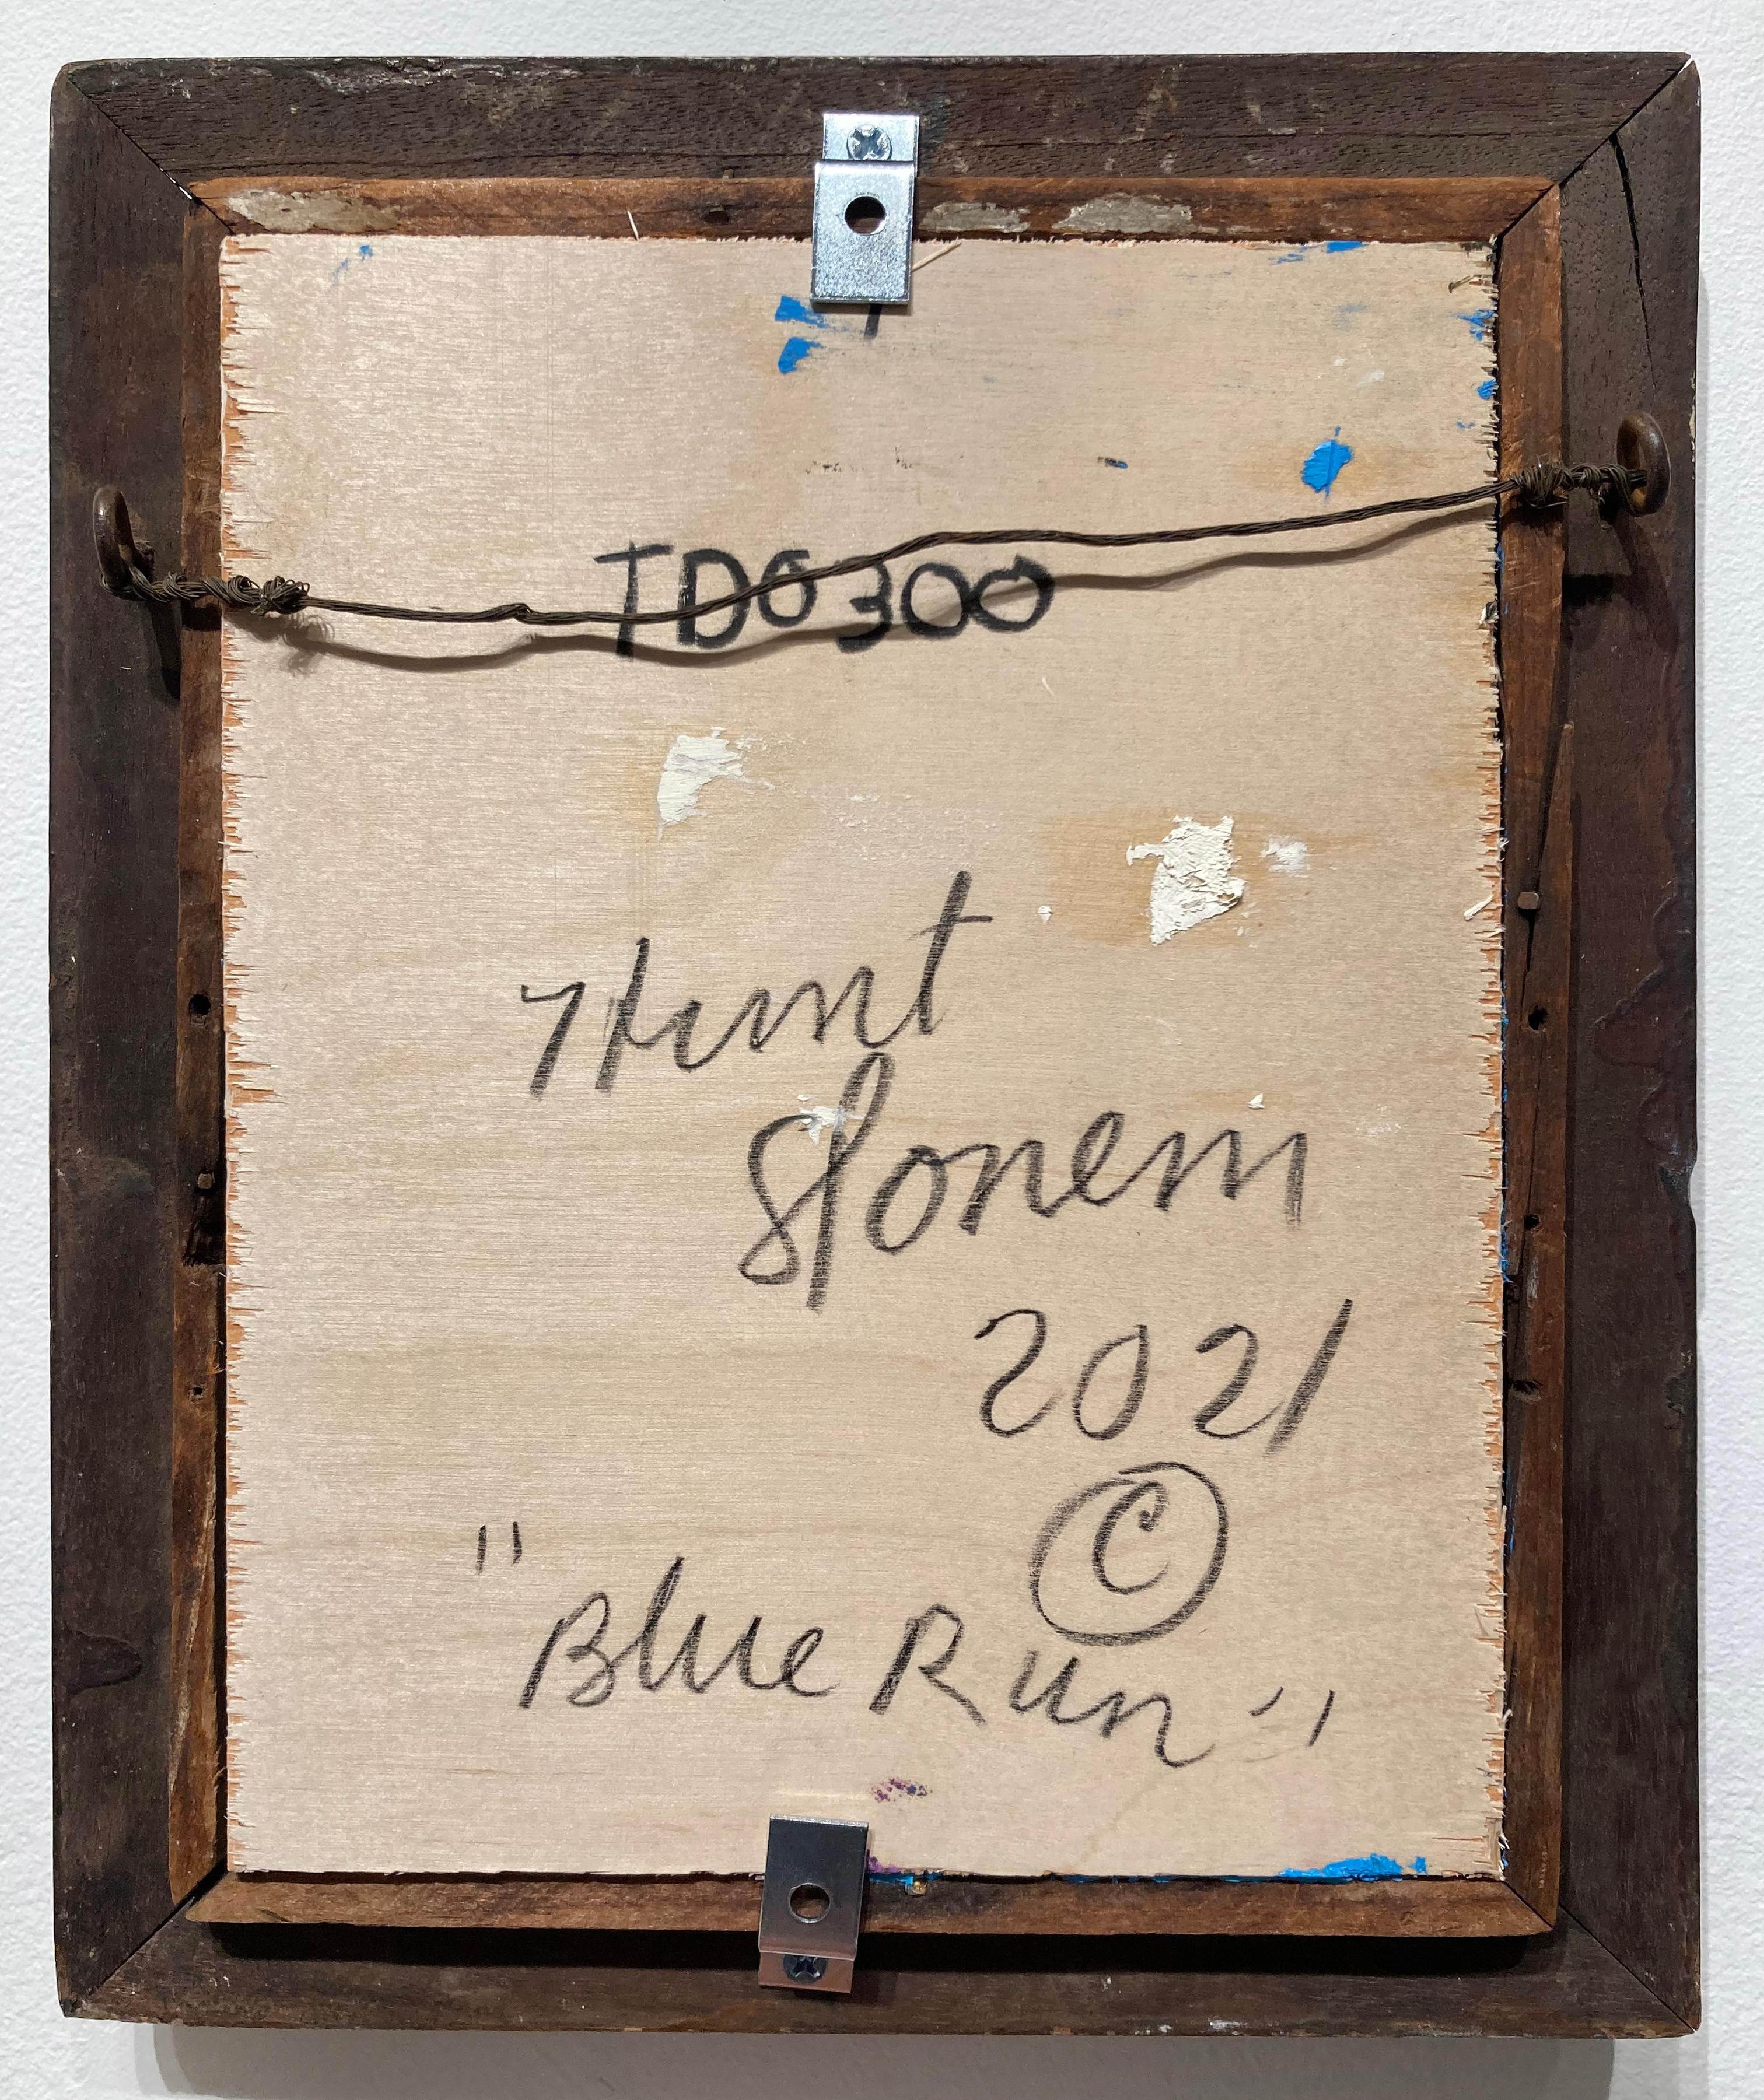 Artist:  Slonem, Hunt
Title:  Blue Run
Date:  2021
Medium:  Oil on Wood
Unframed Dimensions:  8.5